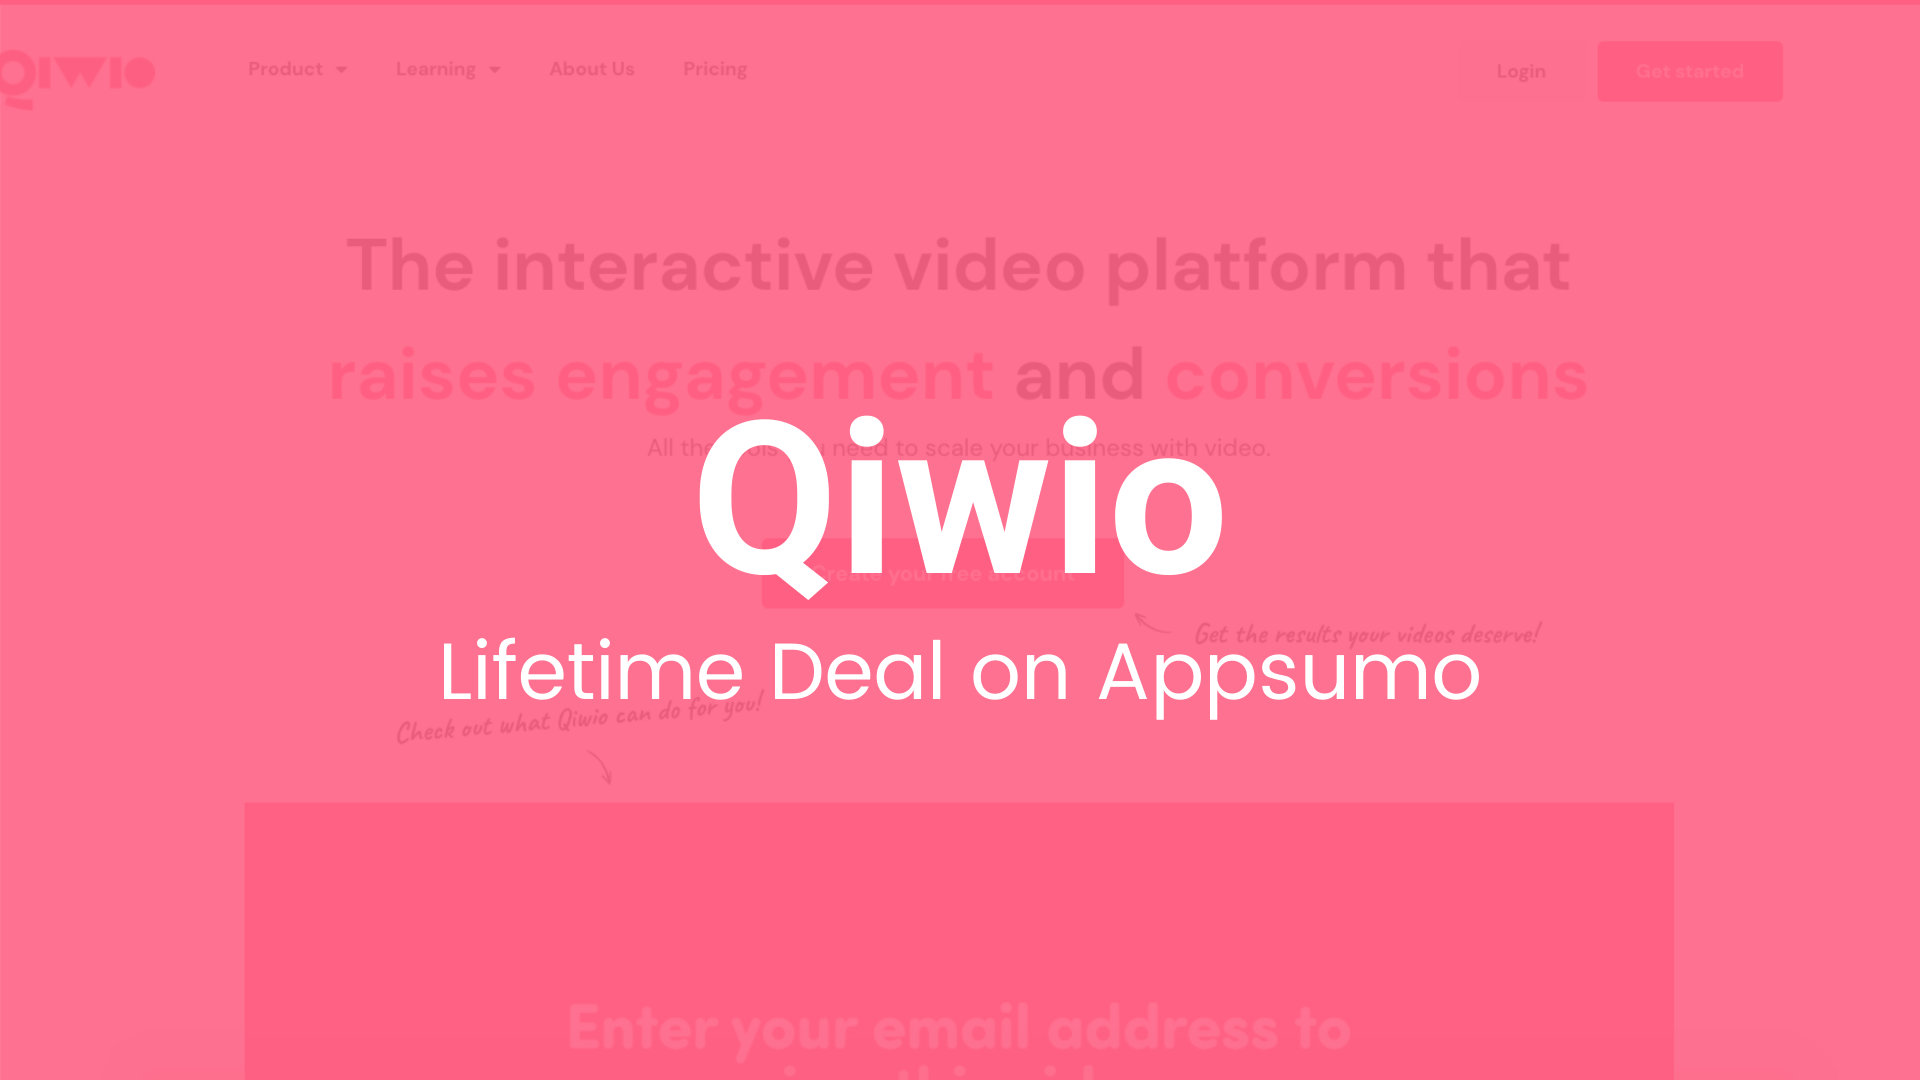 Qiwio: Raising Engagements Through Interactive Videos